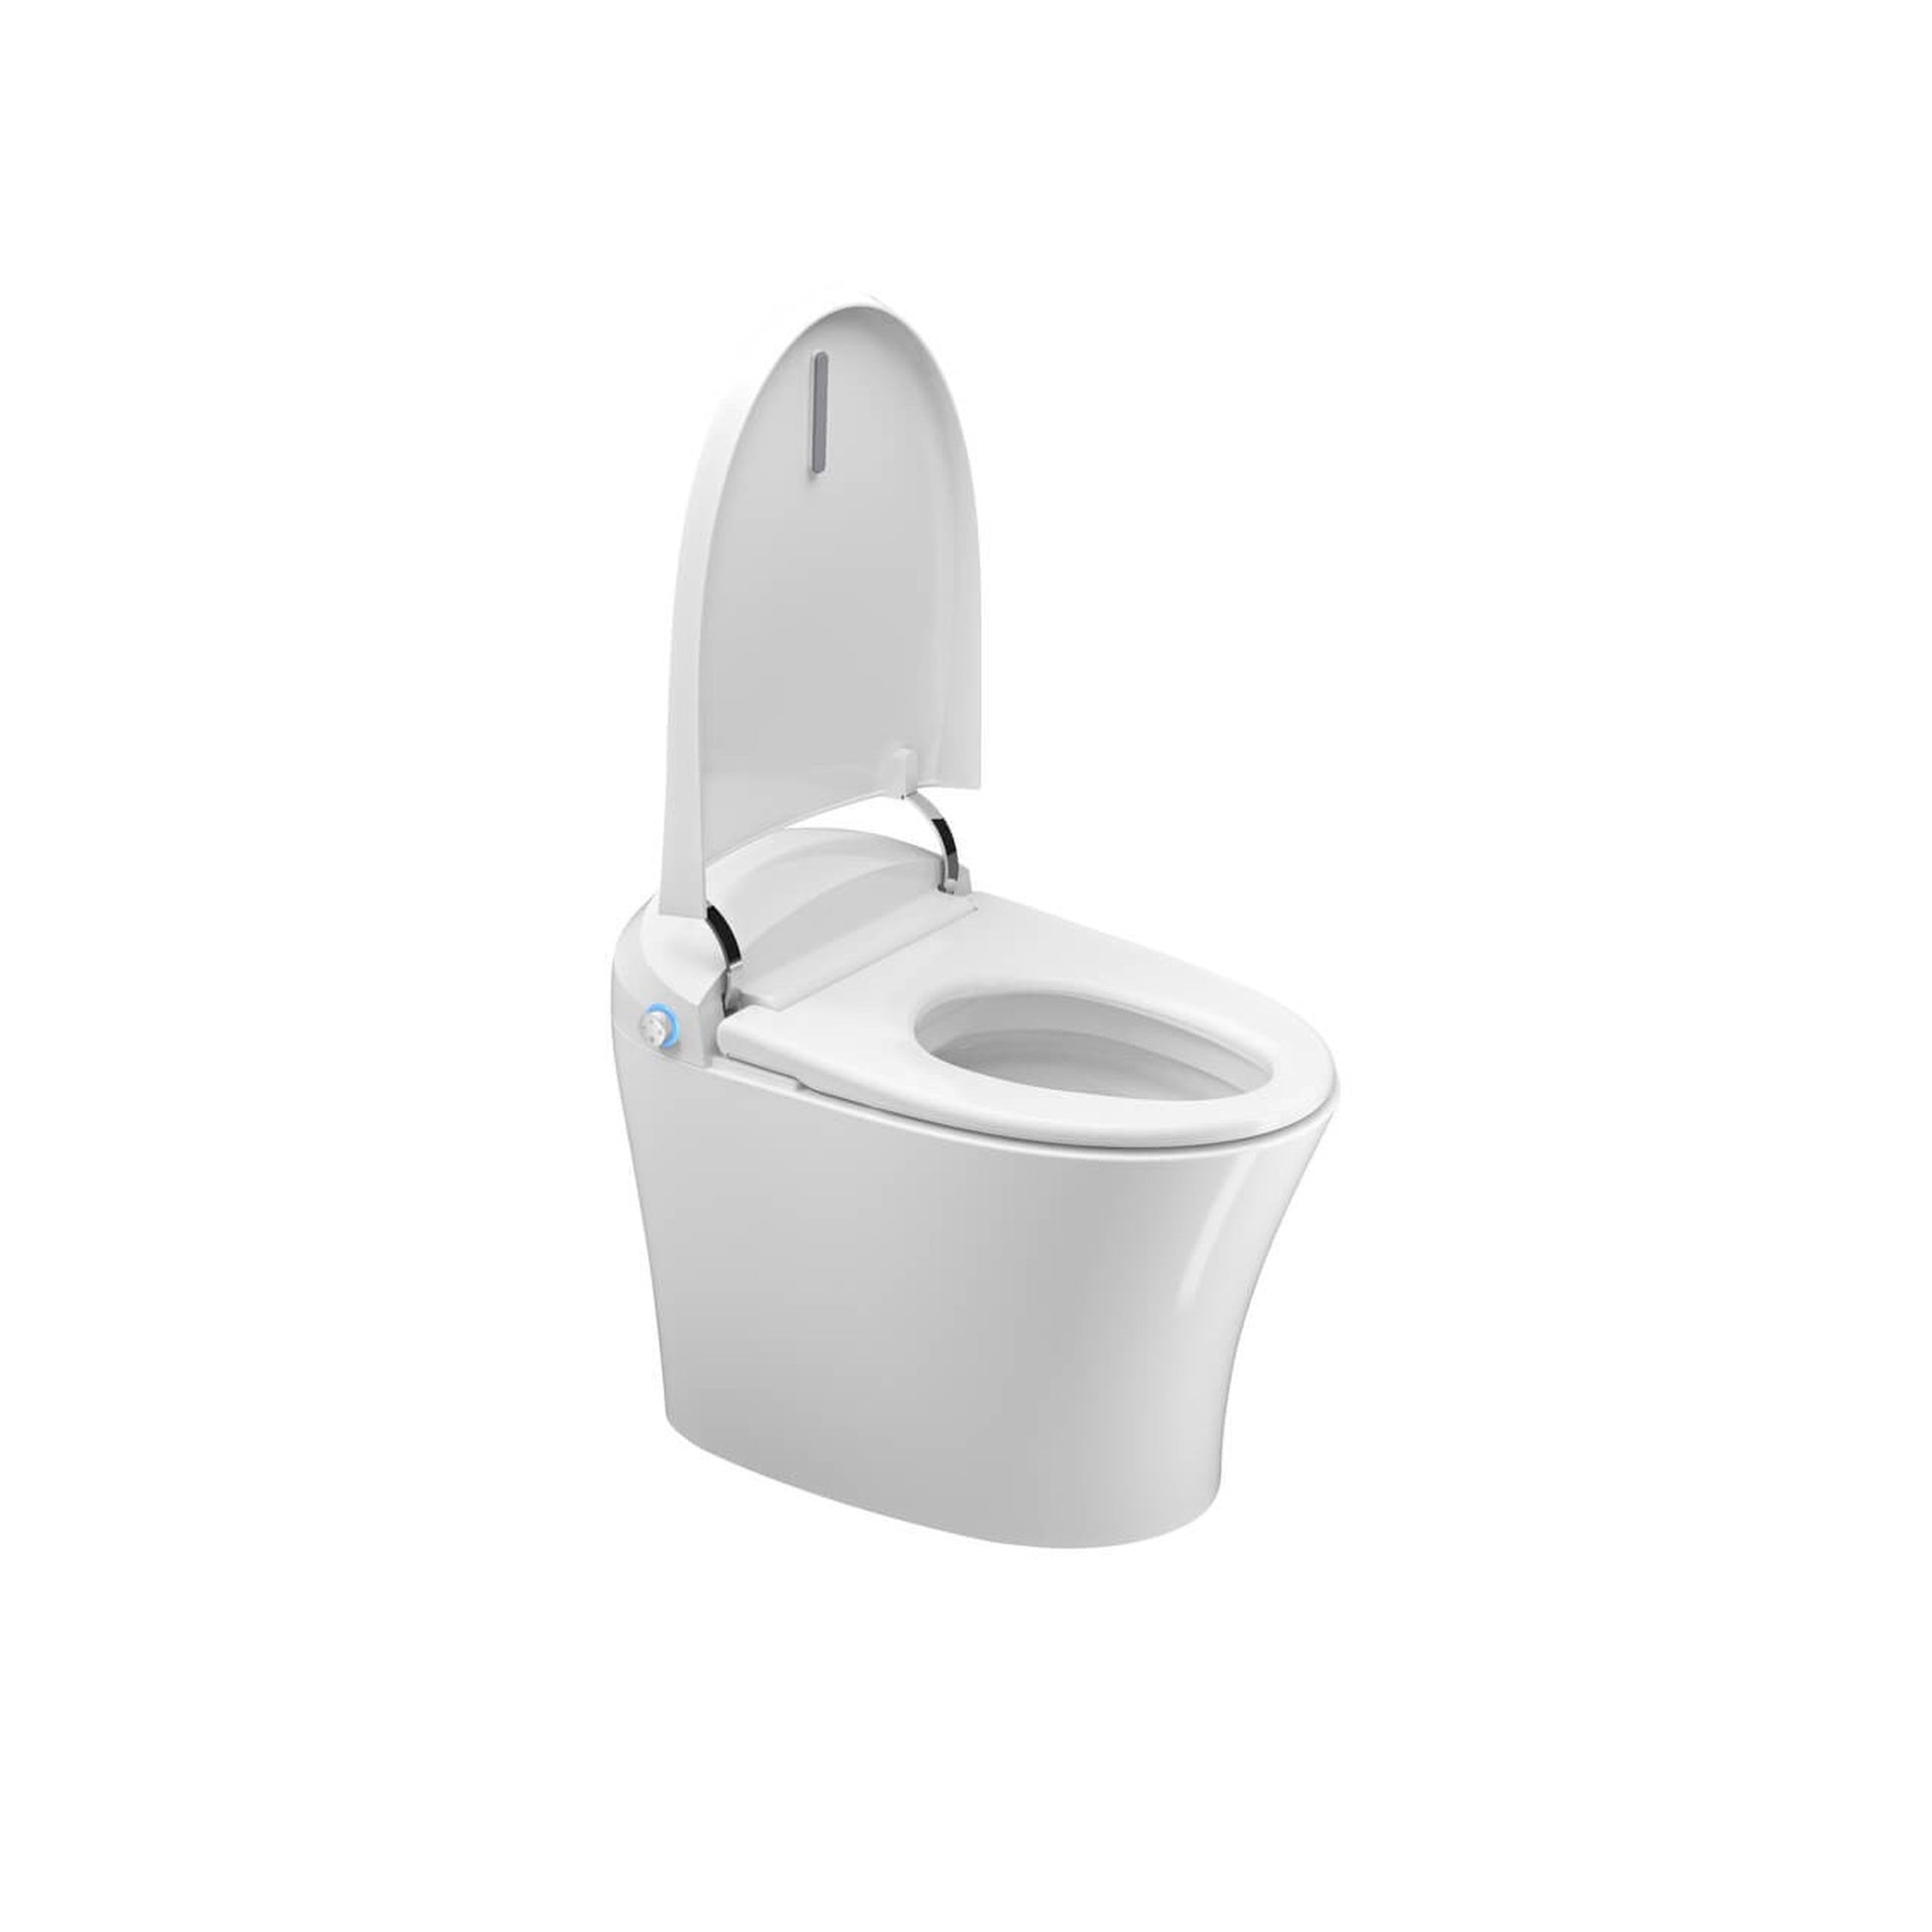 Castello USA New York White Simple Plus Smart Toilet With Built-In Bidet